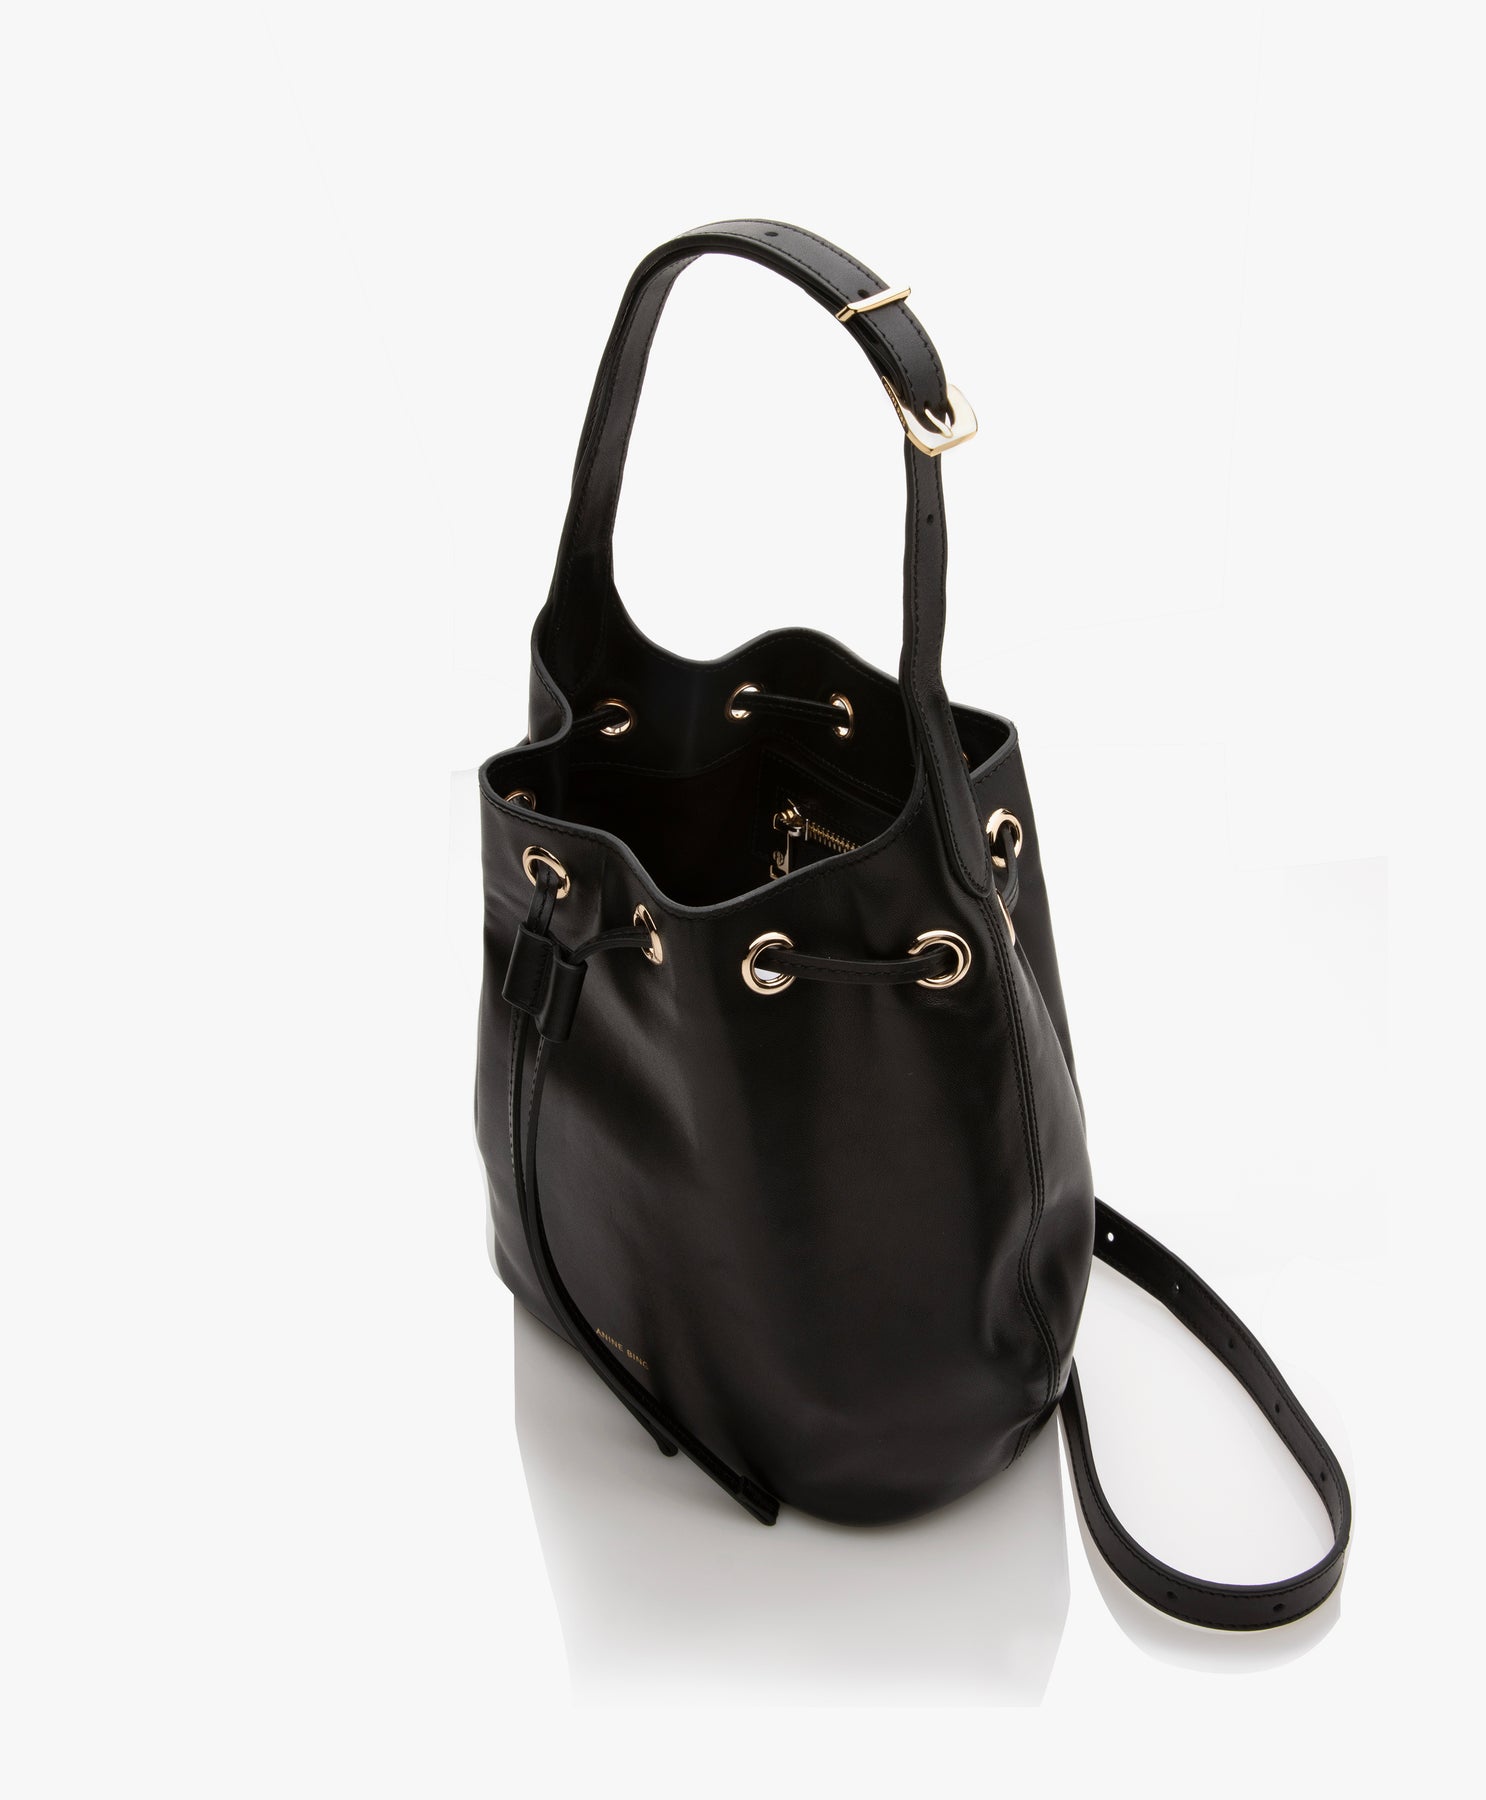 Anine Bing Alana Leather Bucket Bag in Black